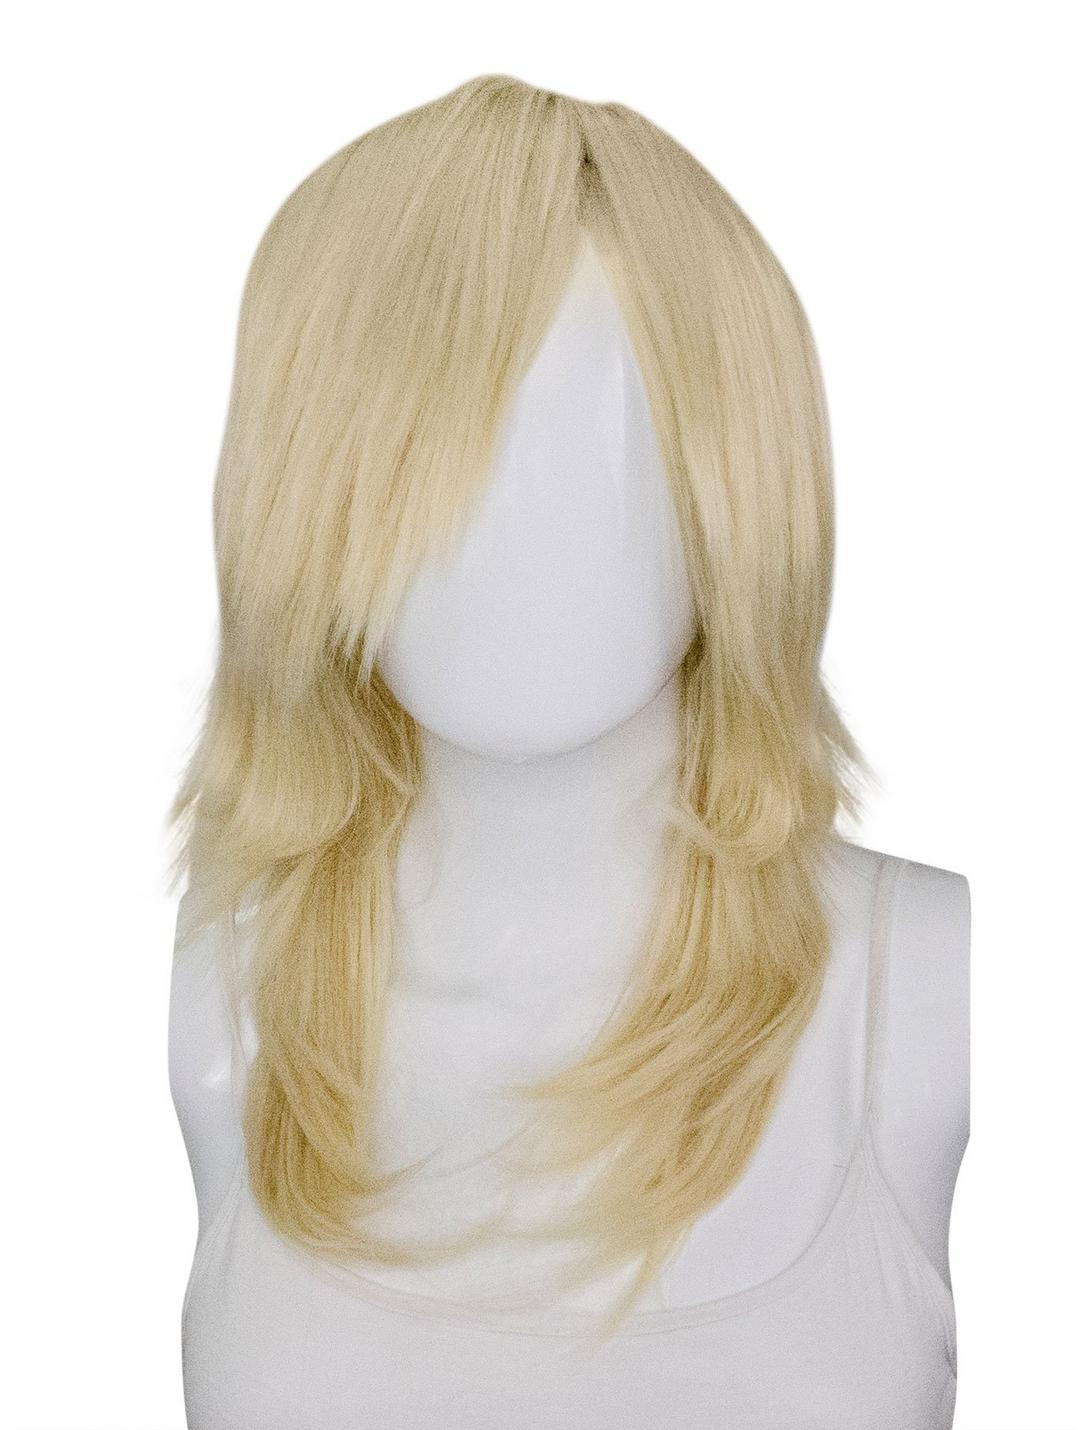 Epic Cosplay Helios Natural Blonde Medium Wig For Spiking, , hi-res